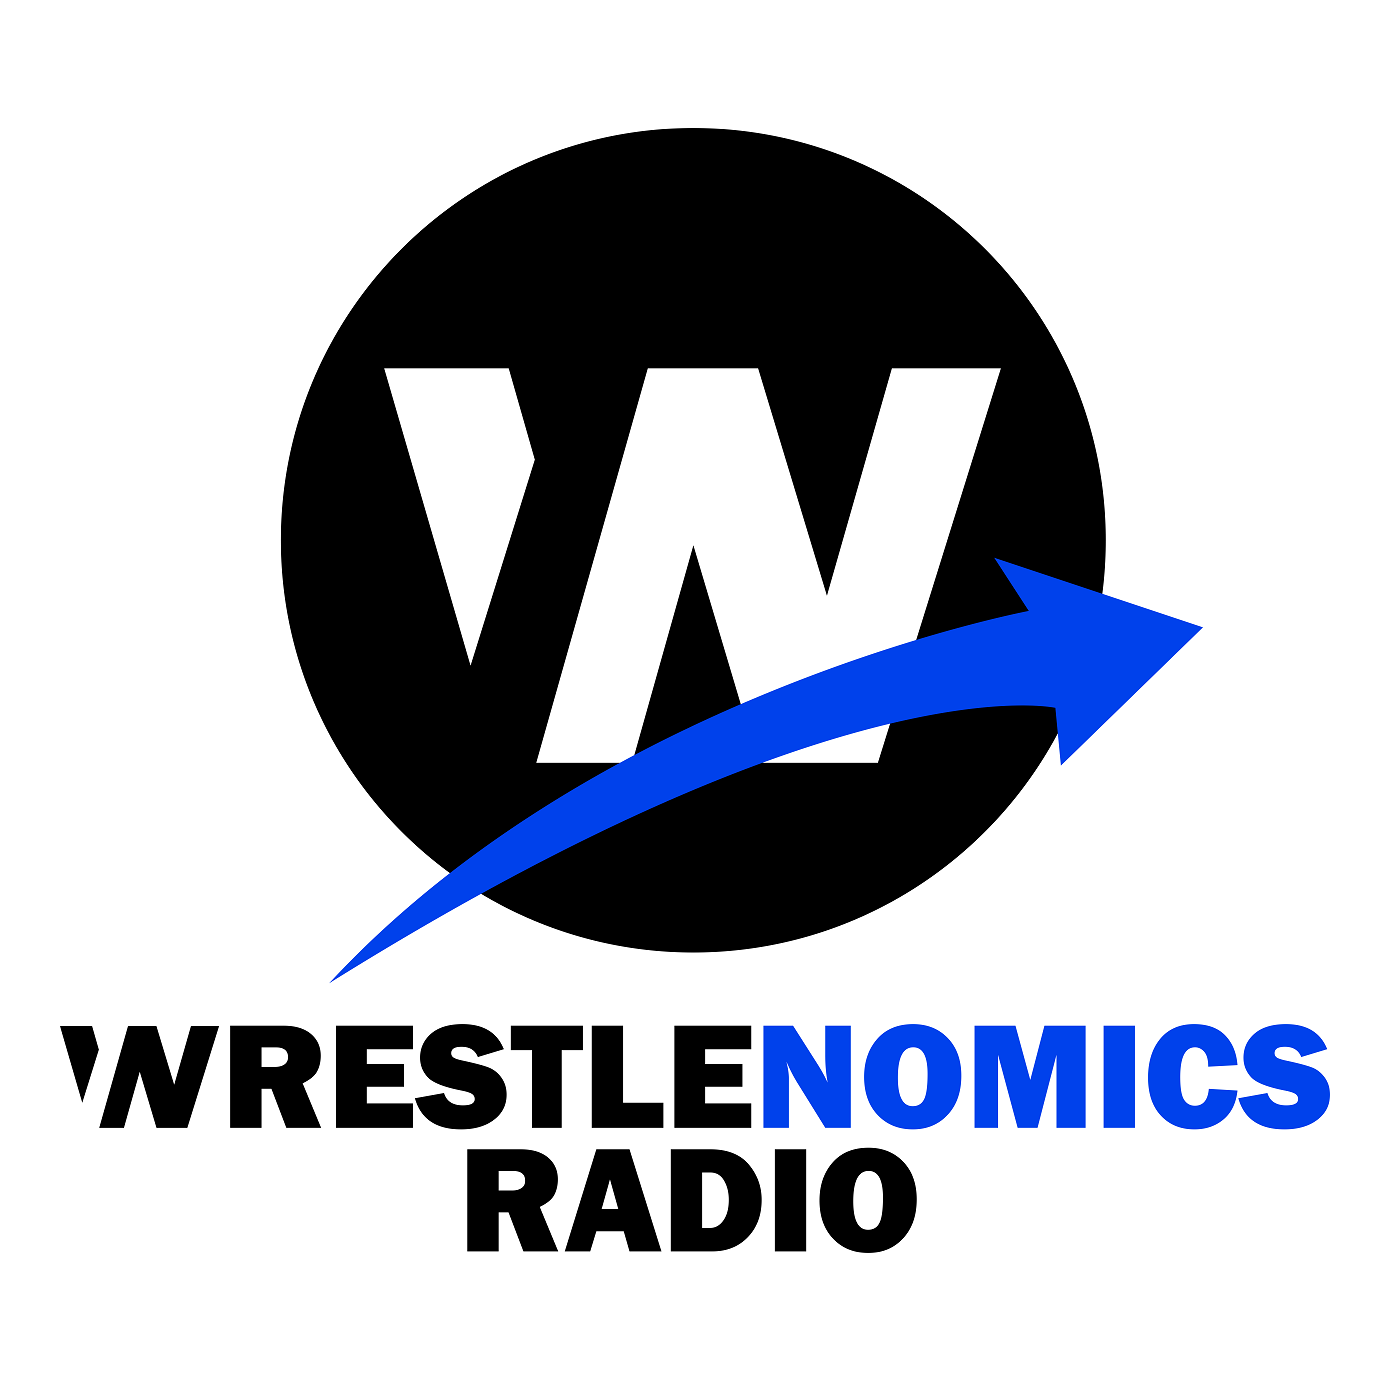 72: Wrestlenomics Radio: Crown Jewel casts shadow on WWE Evolution, WWE stock falls after Q3 report, NXT attendance, Roman Reigns